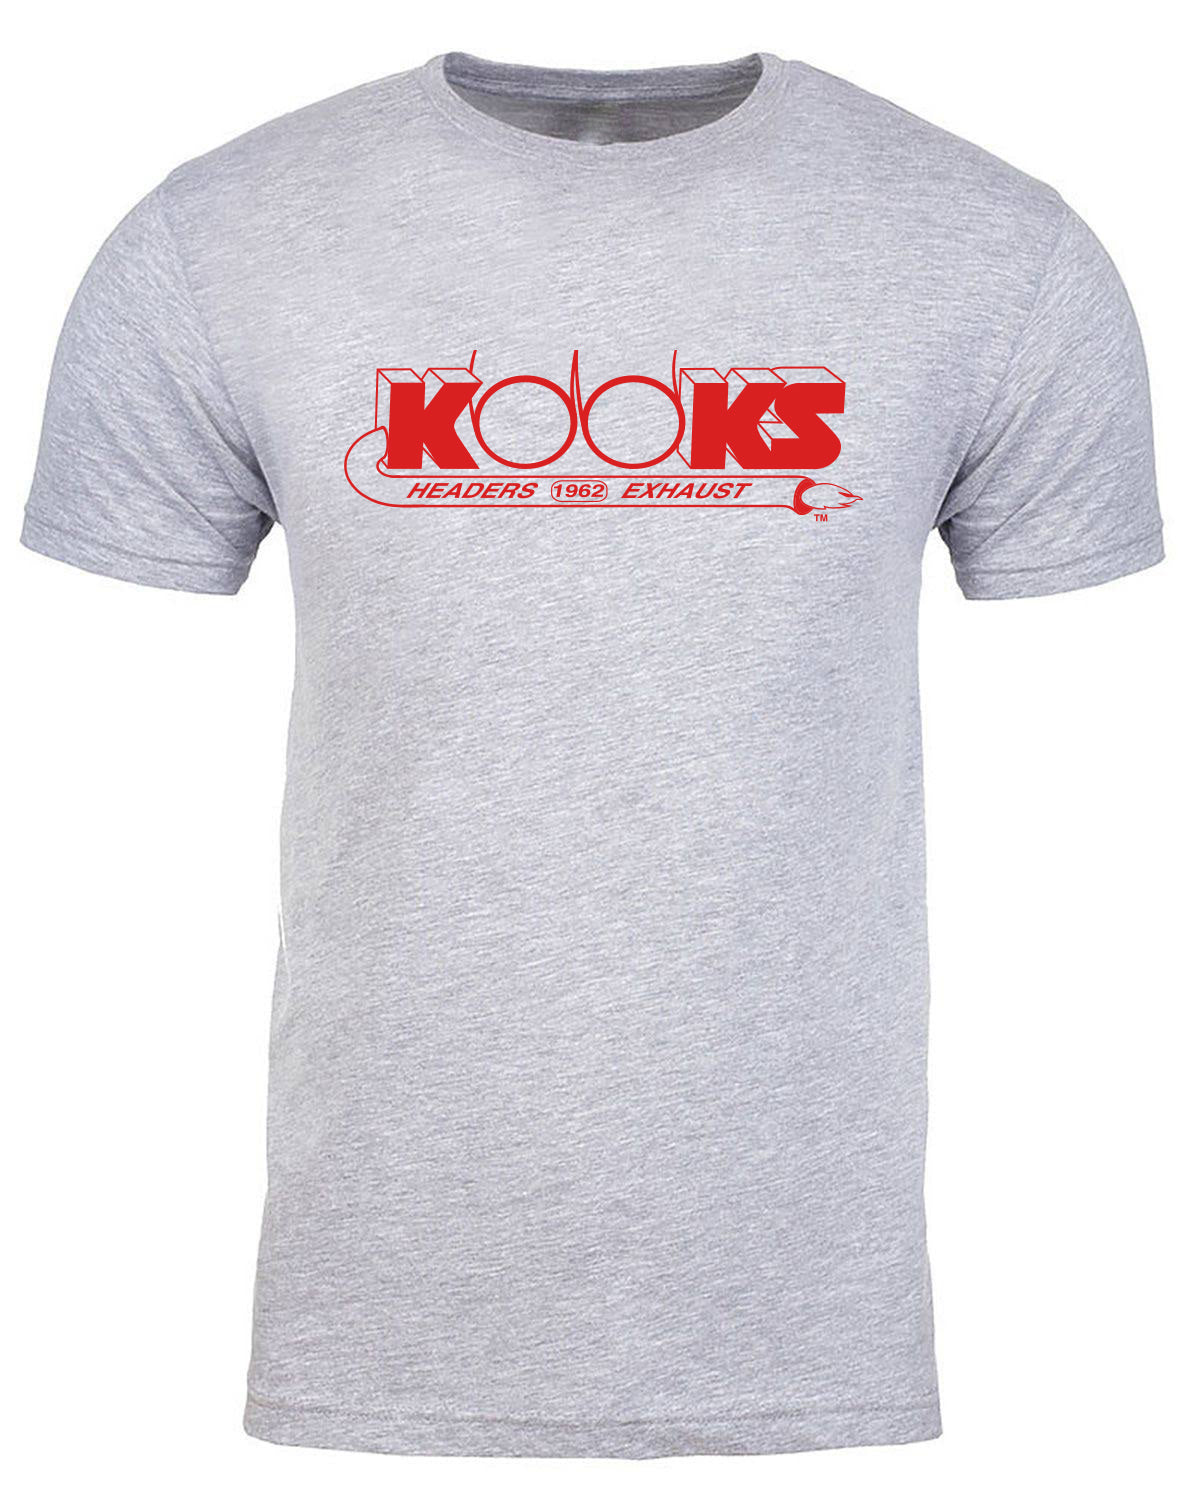 Kooks Custom Headers T-Shirt TS-100648-04